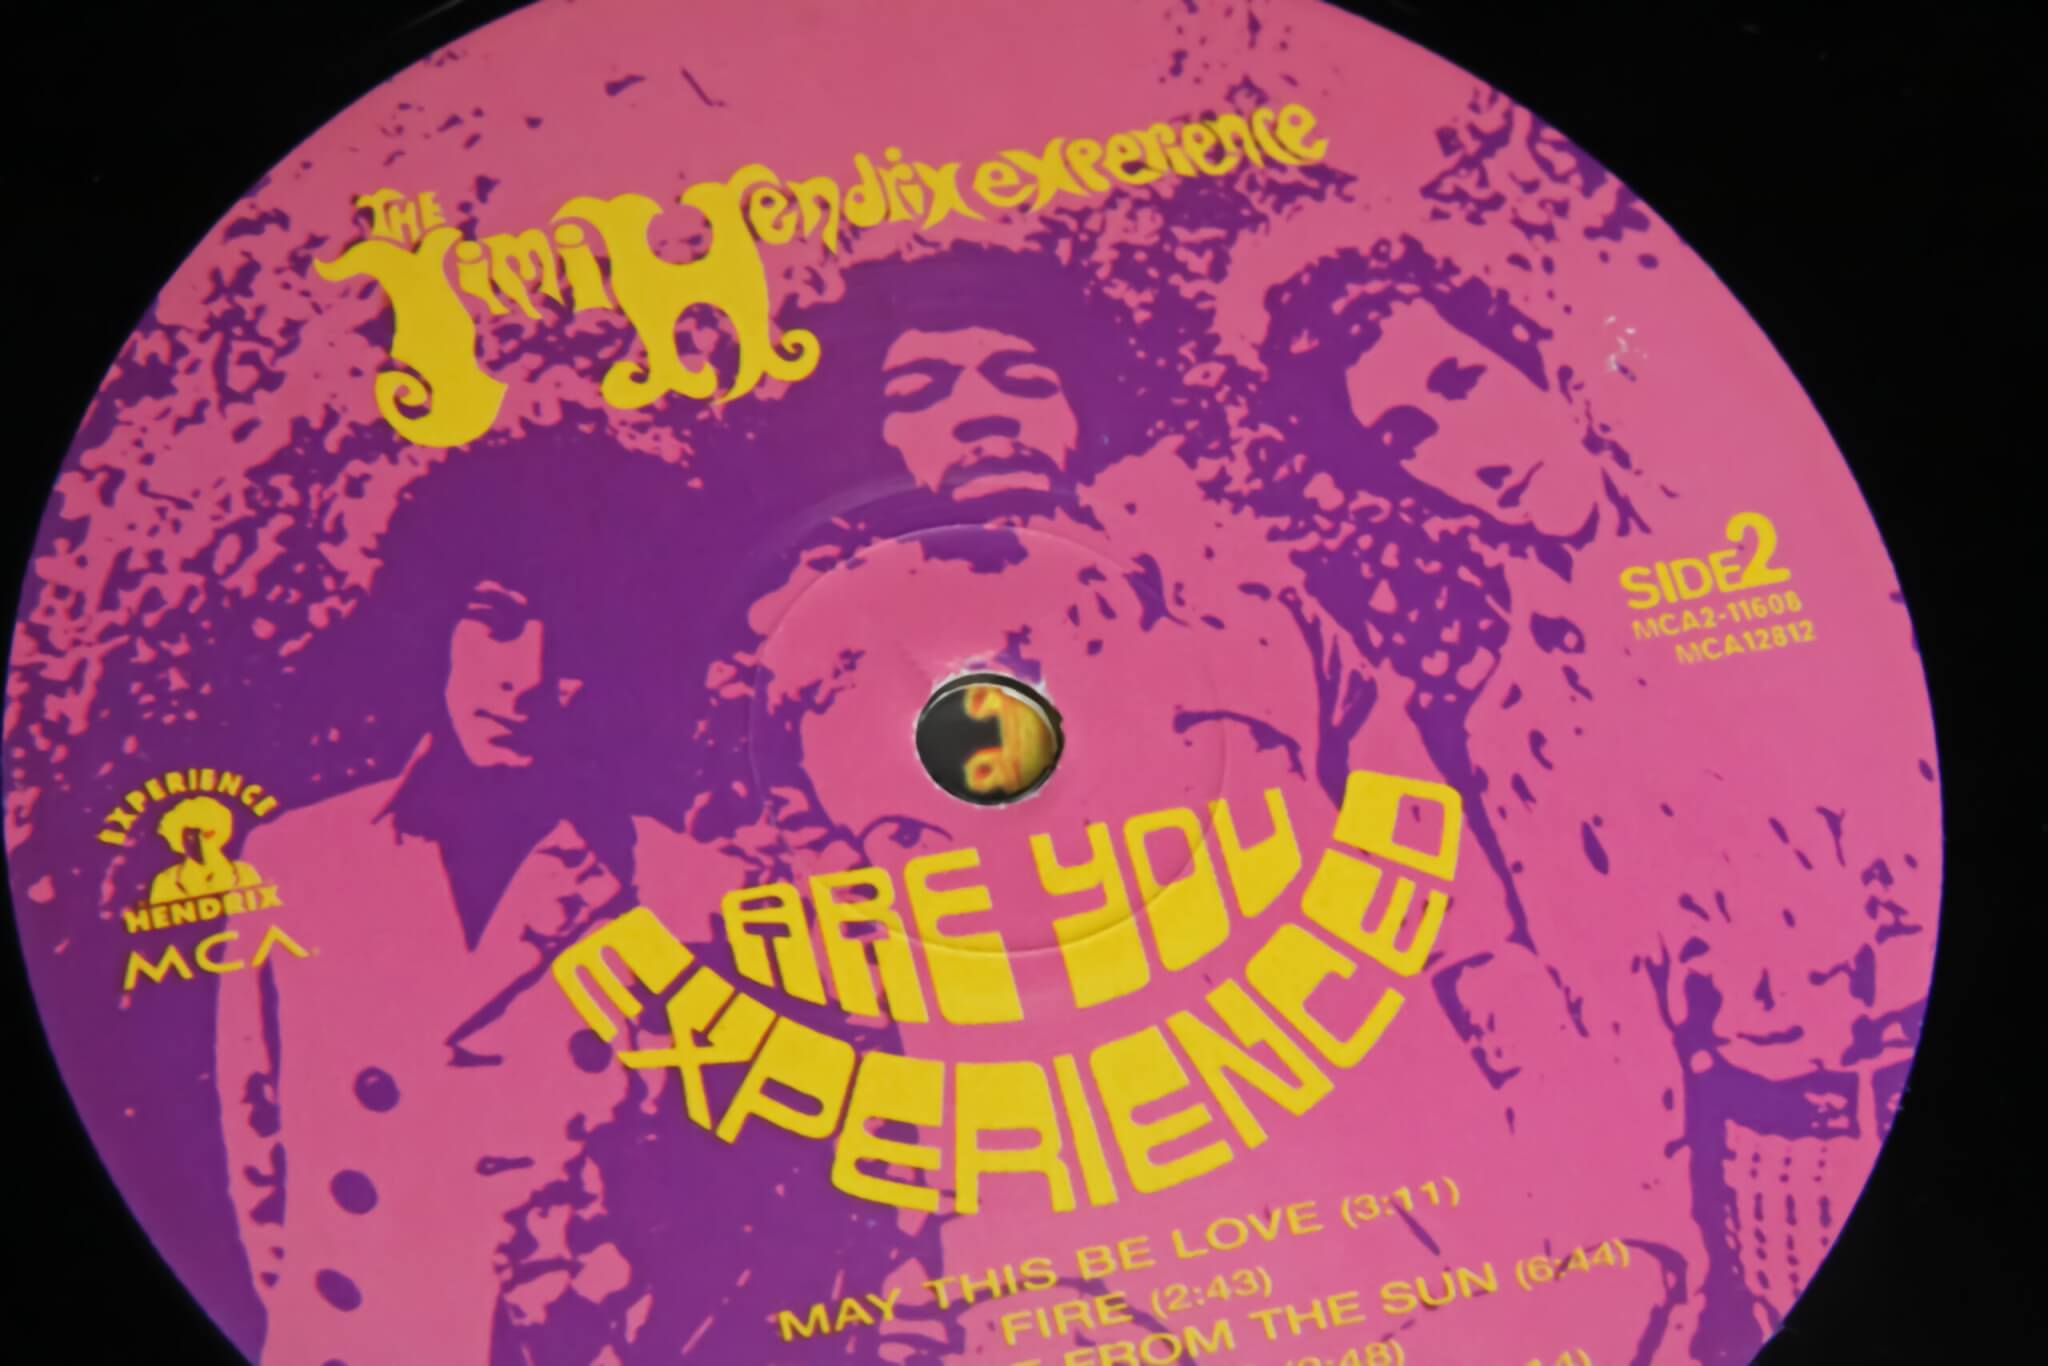 Jimi Hendrix's "Are You Experienced" album